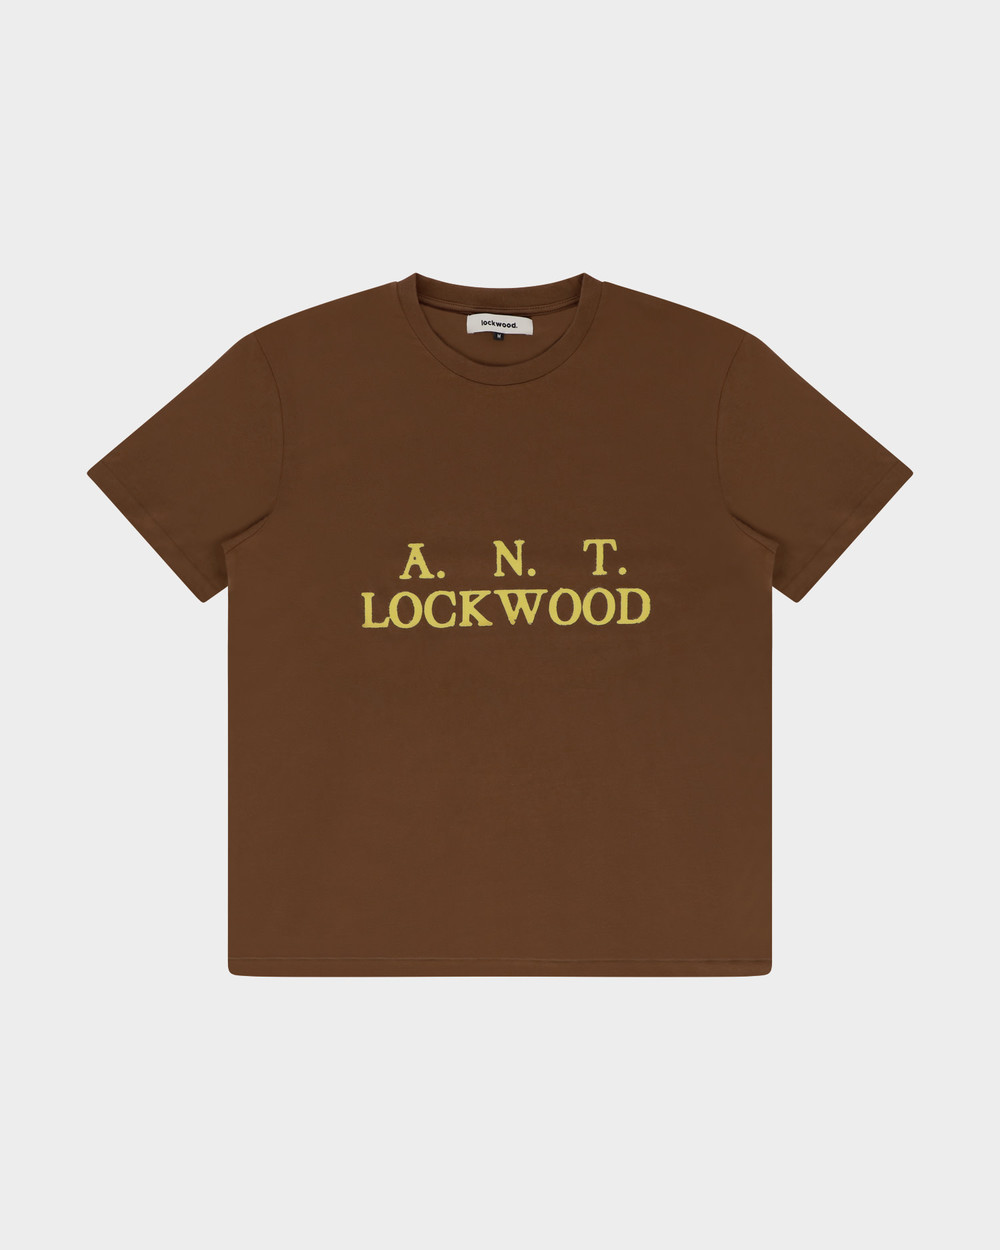 Lockwood Lockwood Initials Antwerp T-Shirt Brown